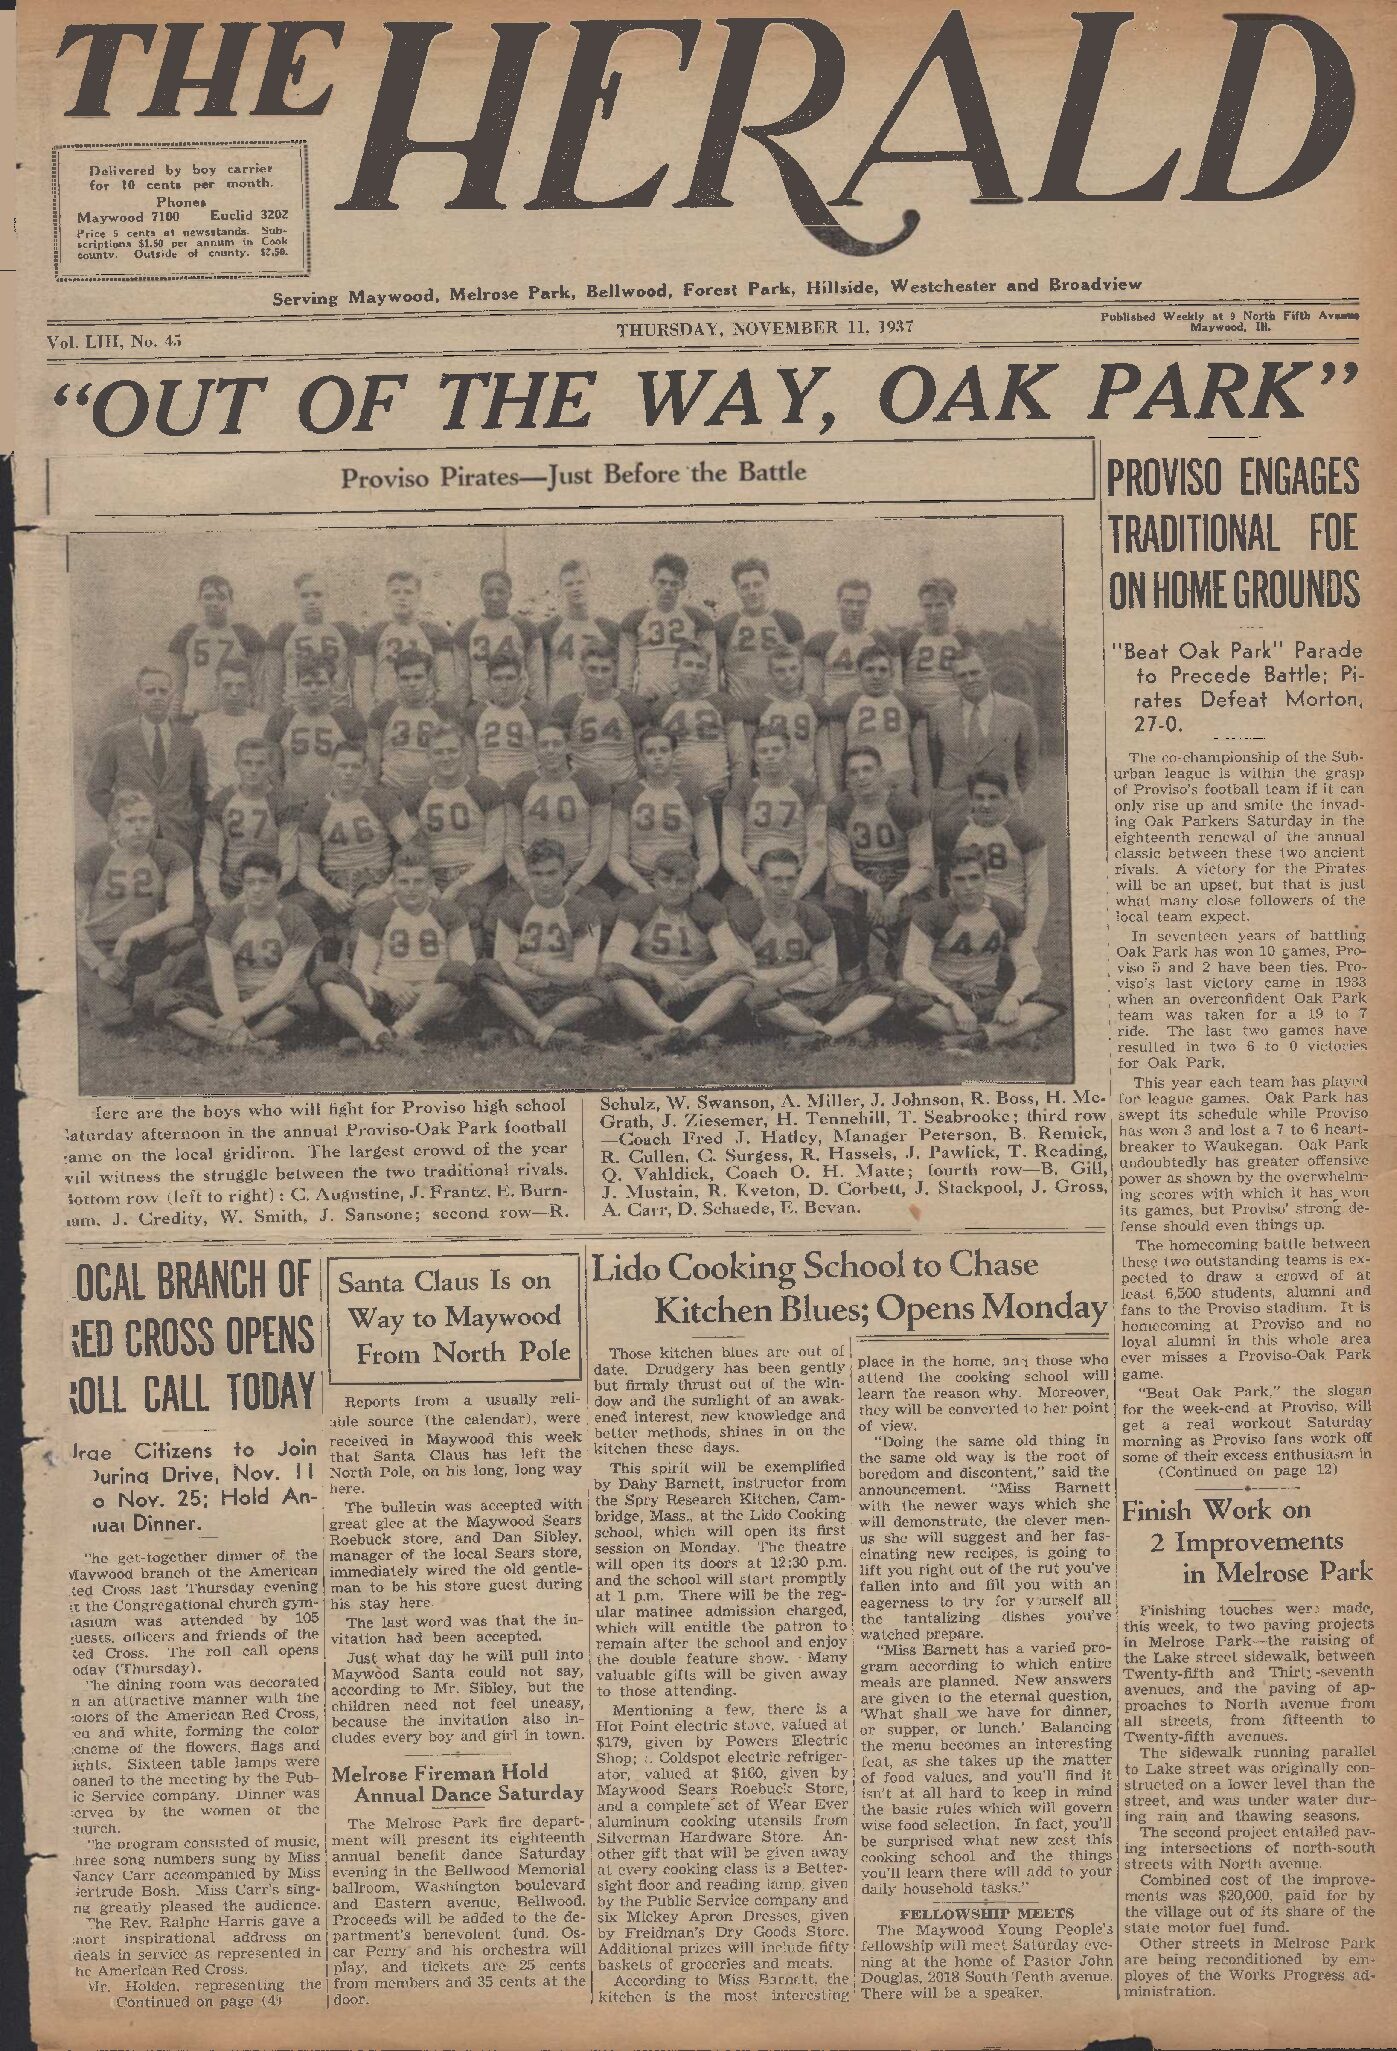 The Herald – 19371111